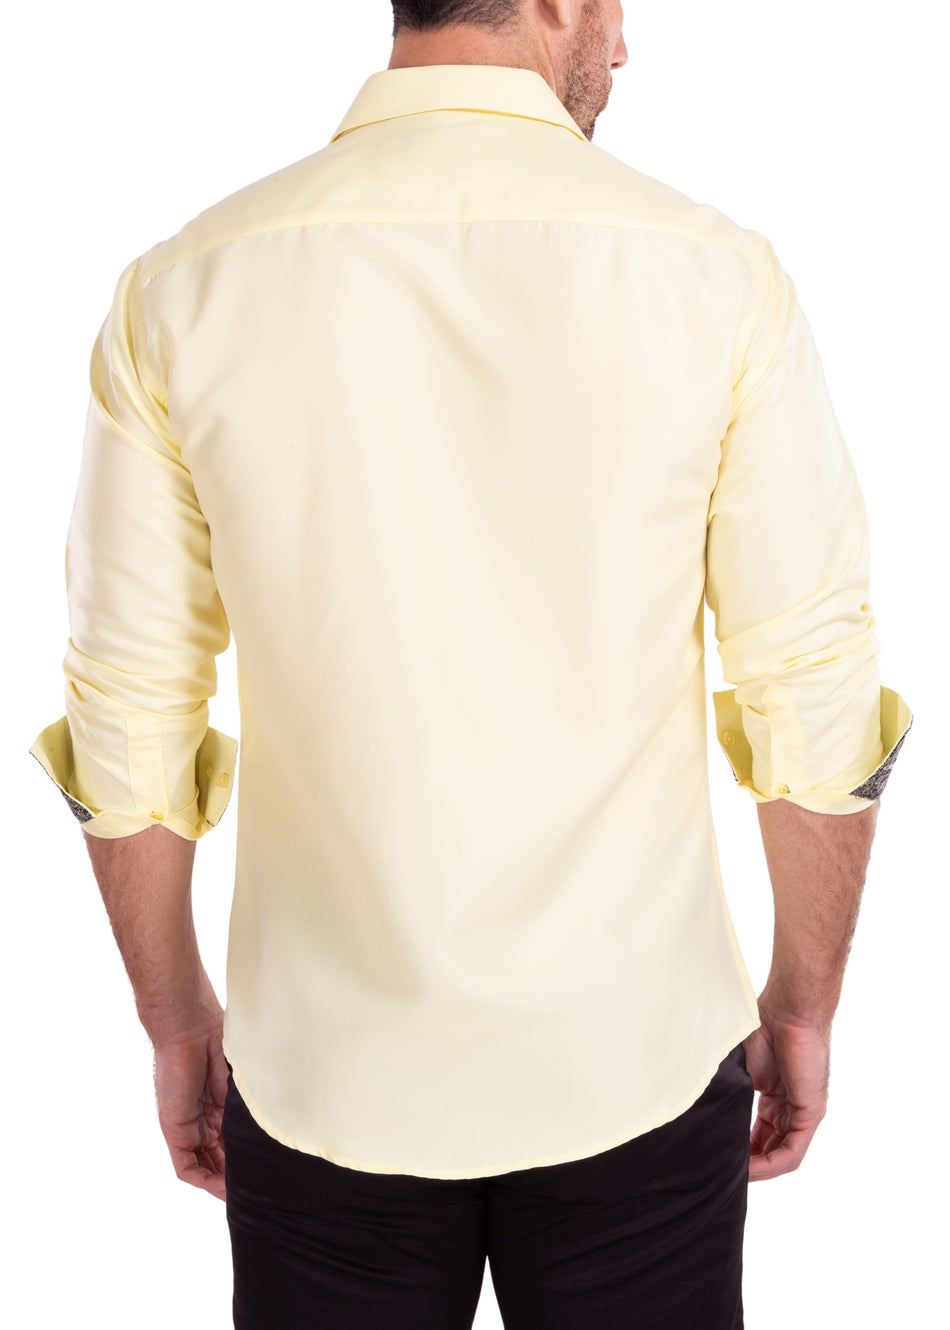 212350 - Yellow Long Sleeve Shirt